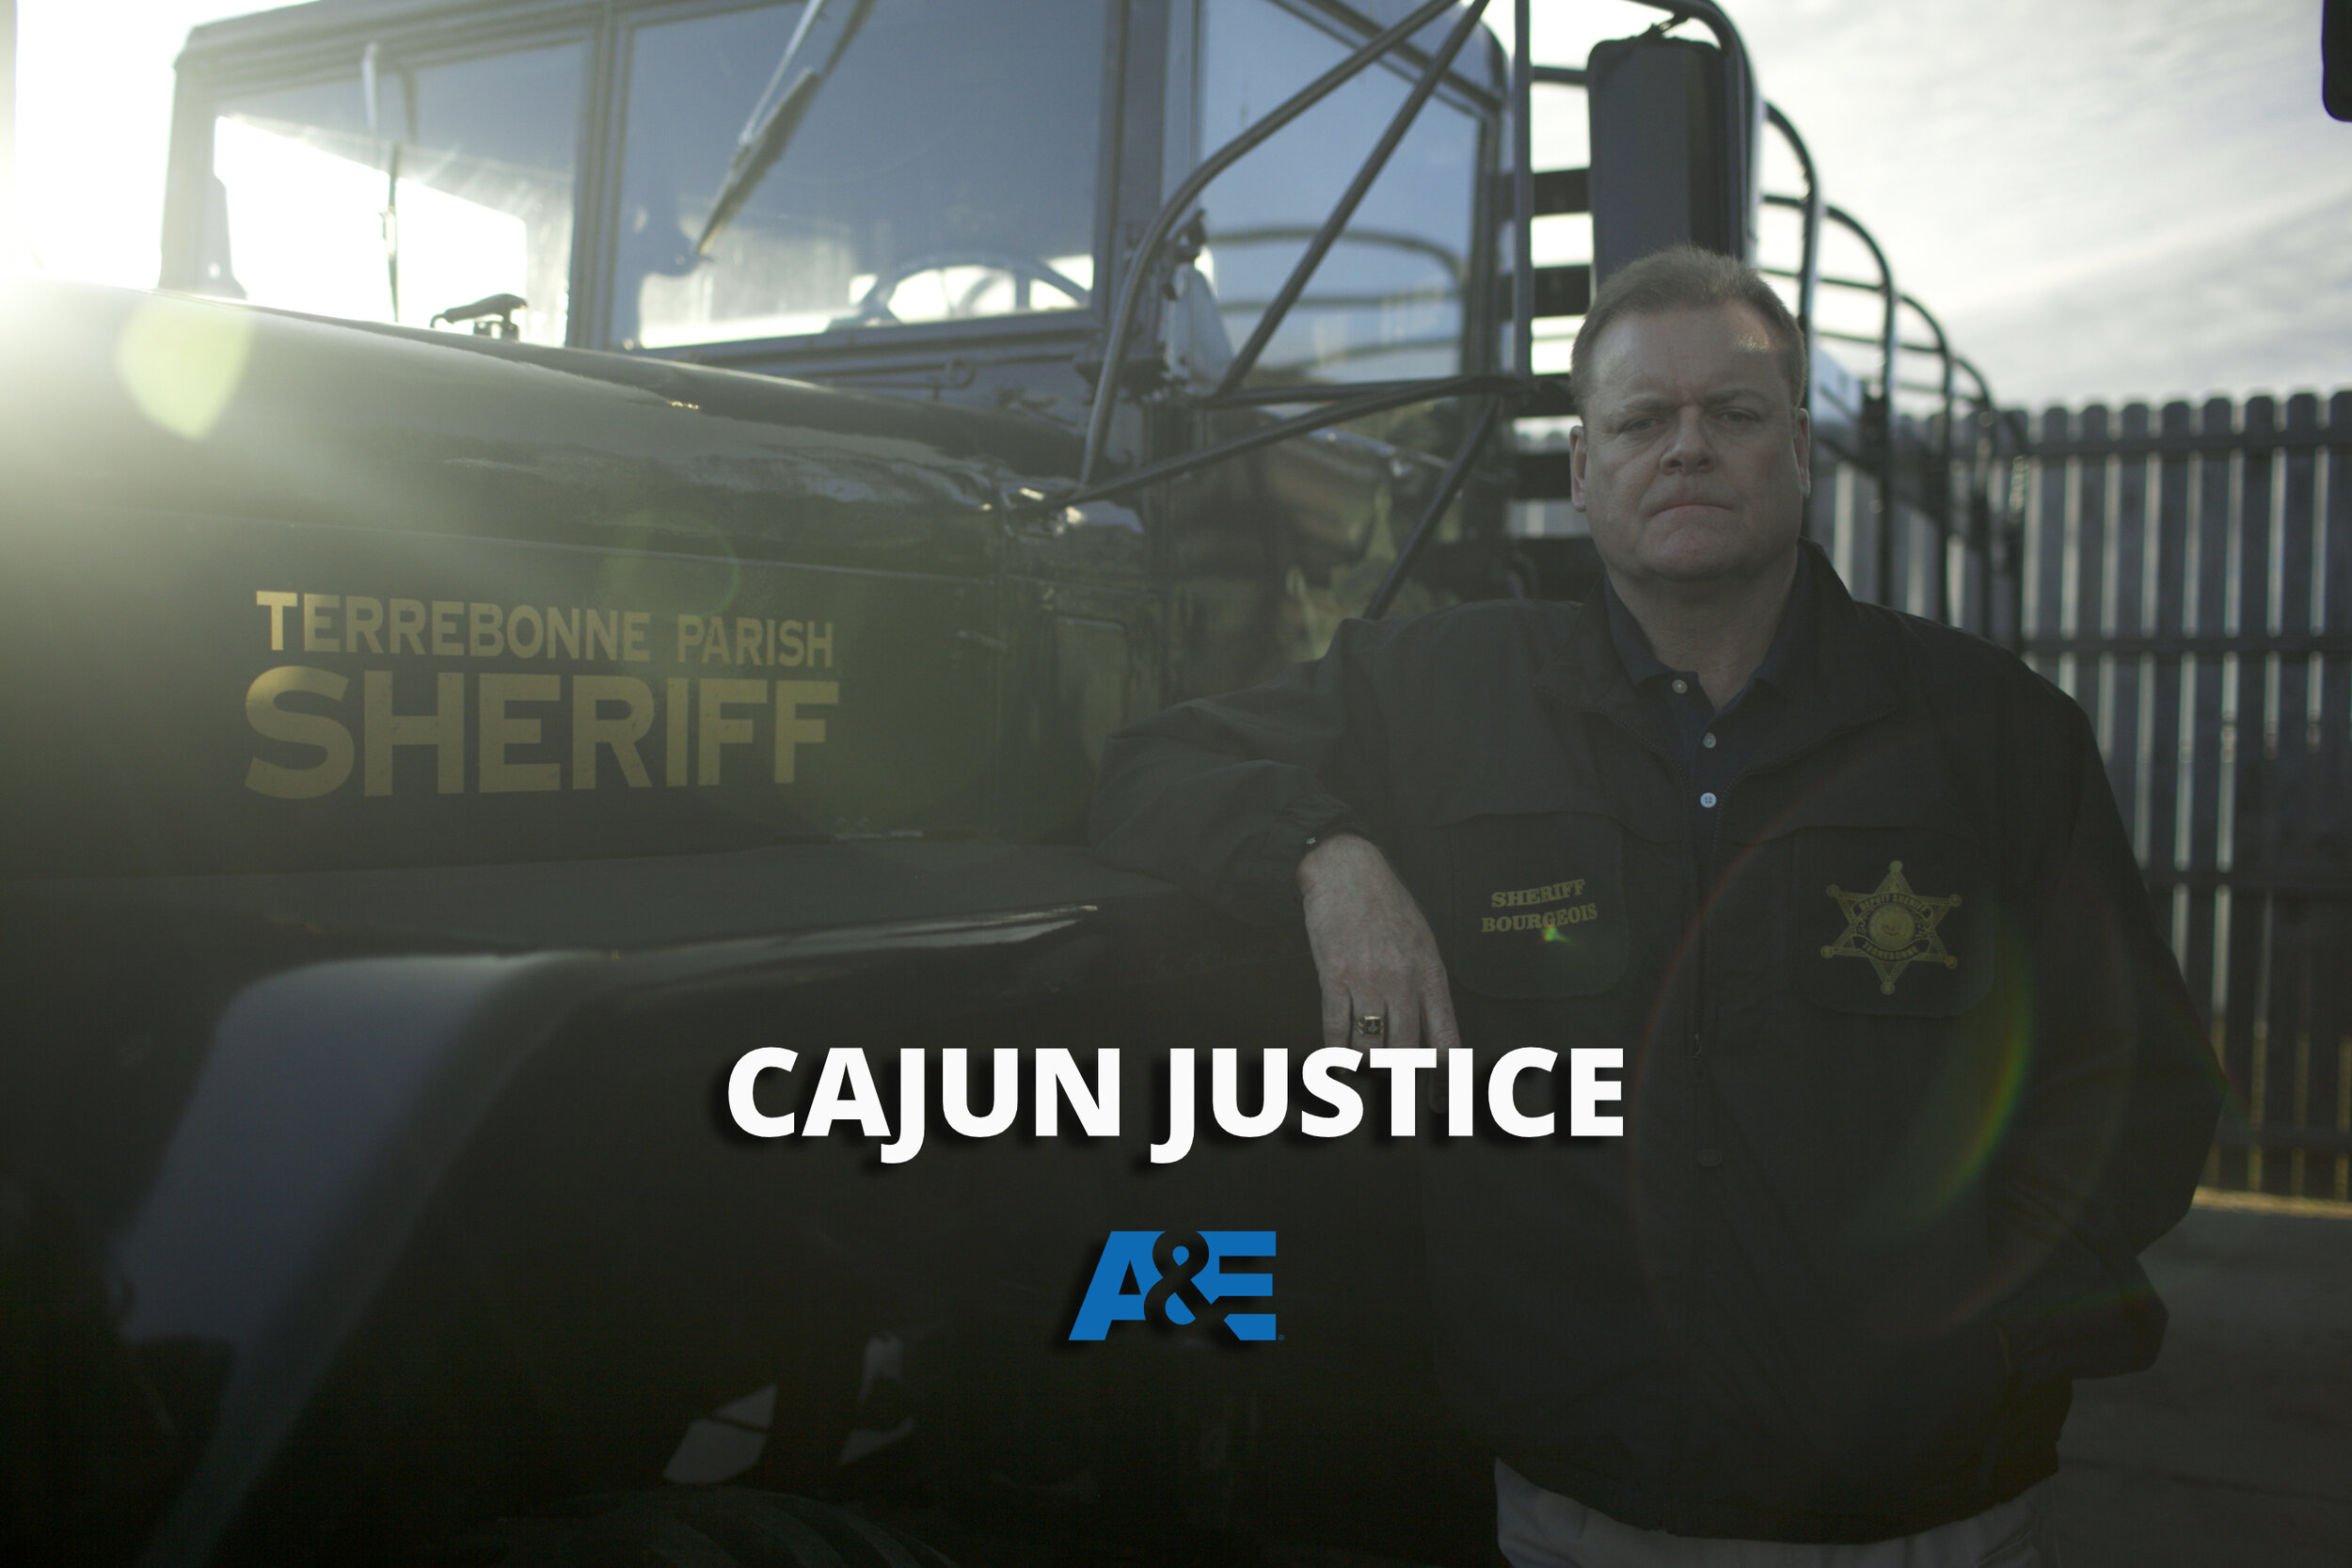 Cajun Justice w_ logo and text (Mojave)-2-2.jpg